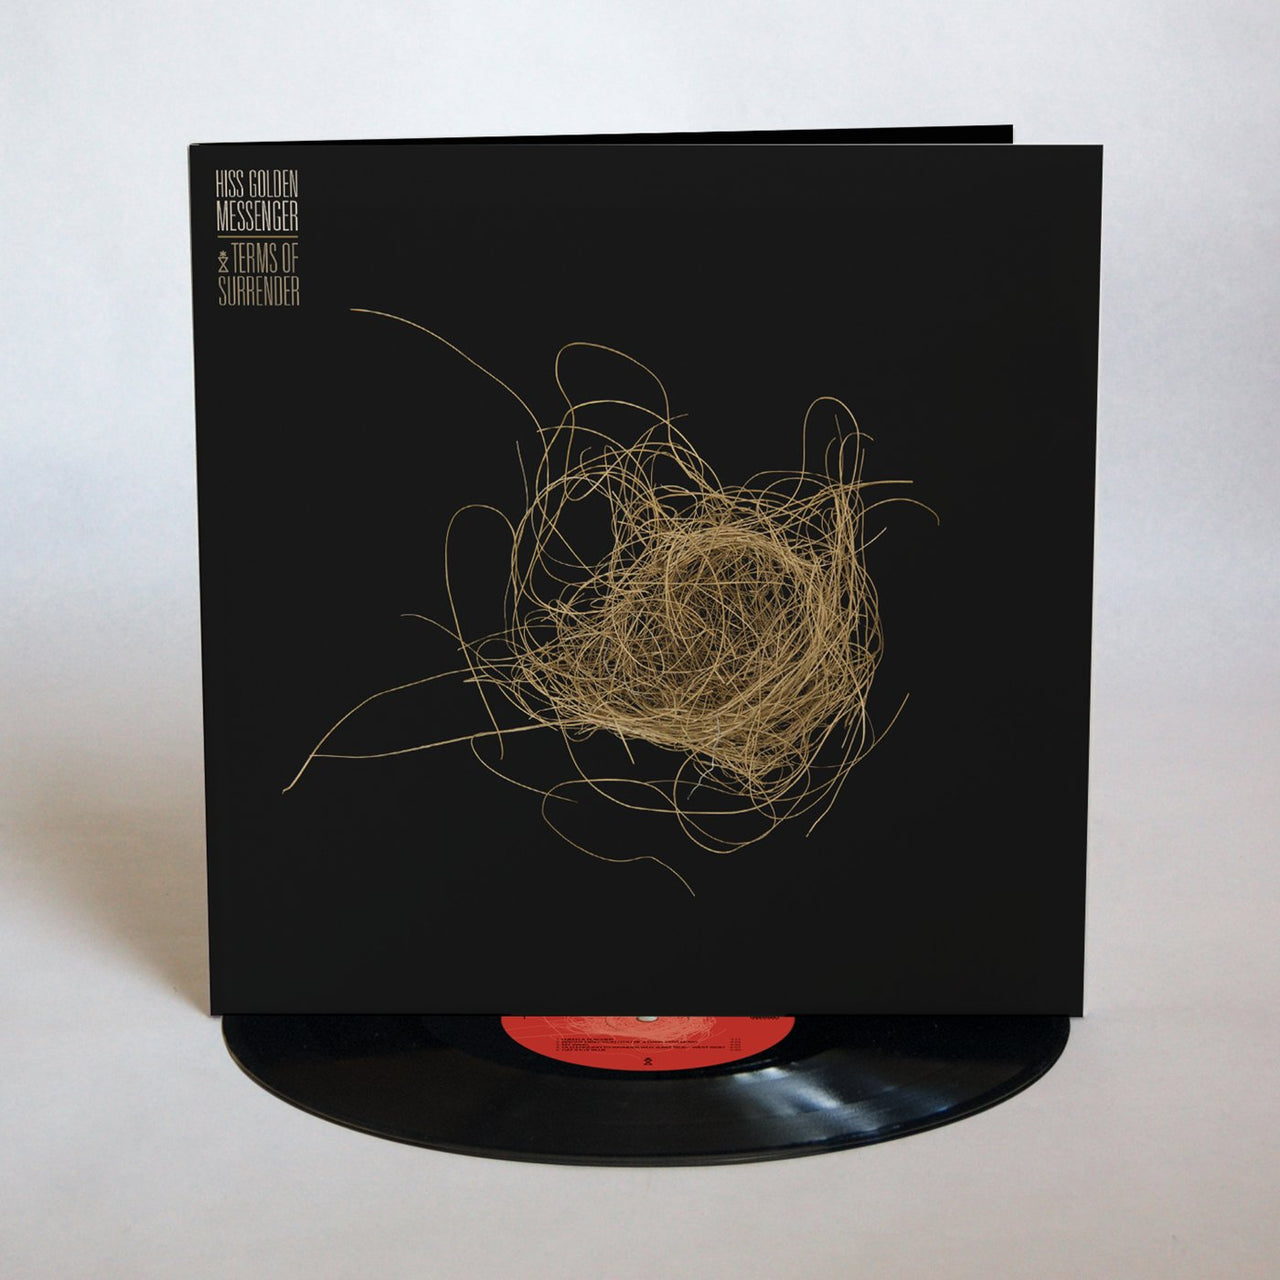 Hiss Golden Messenger: Terms of Surrender Vinyl LP